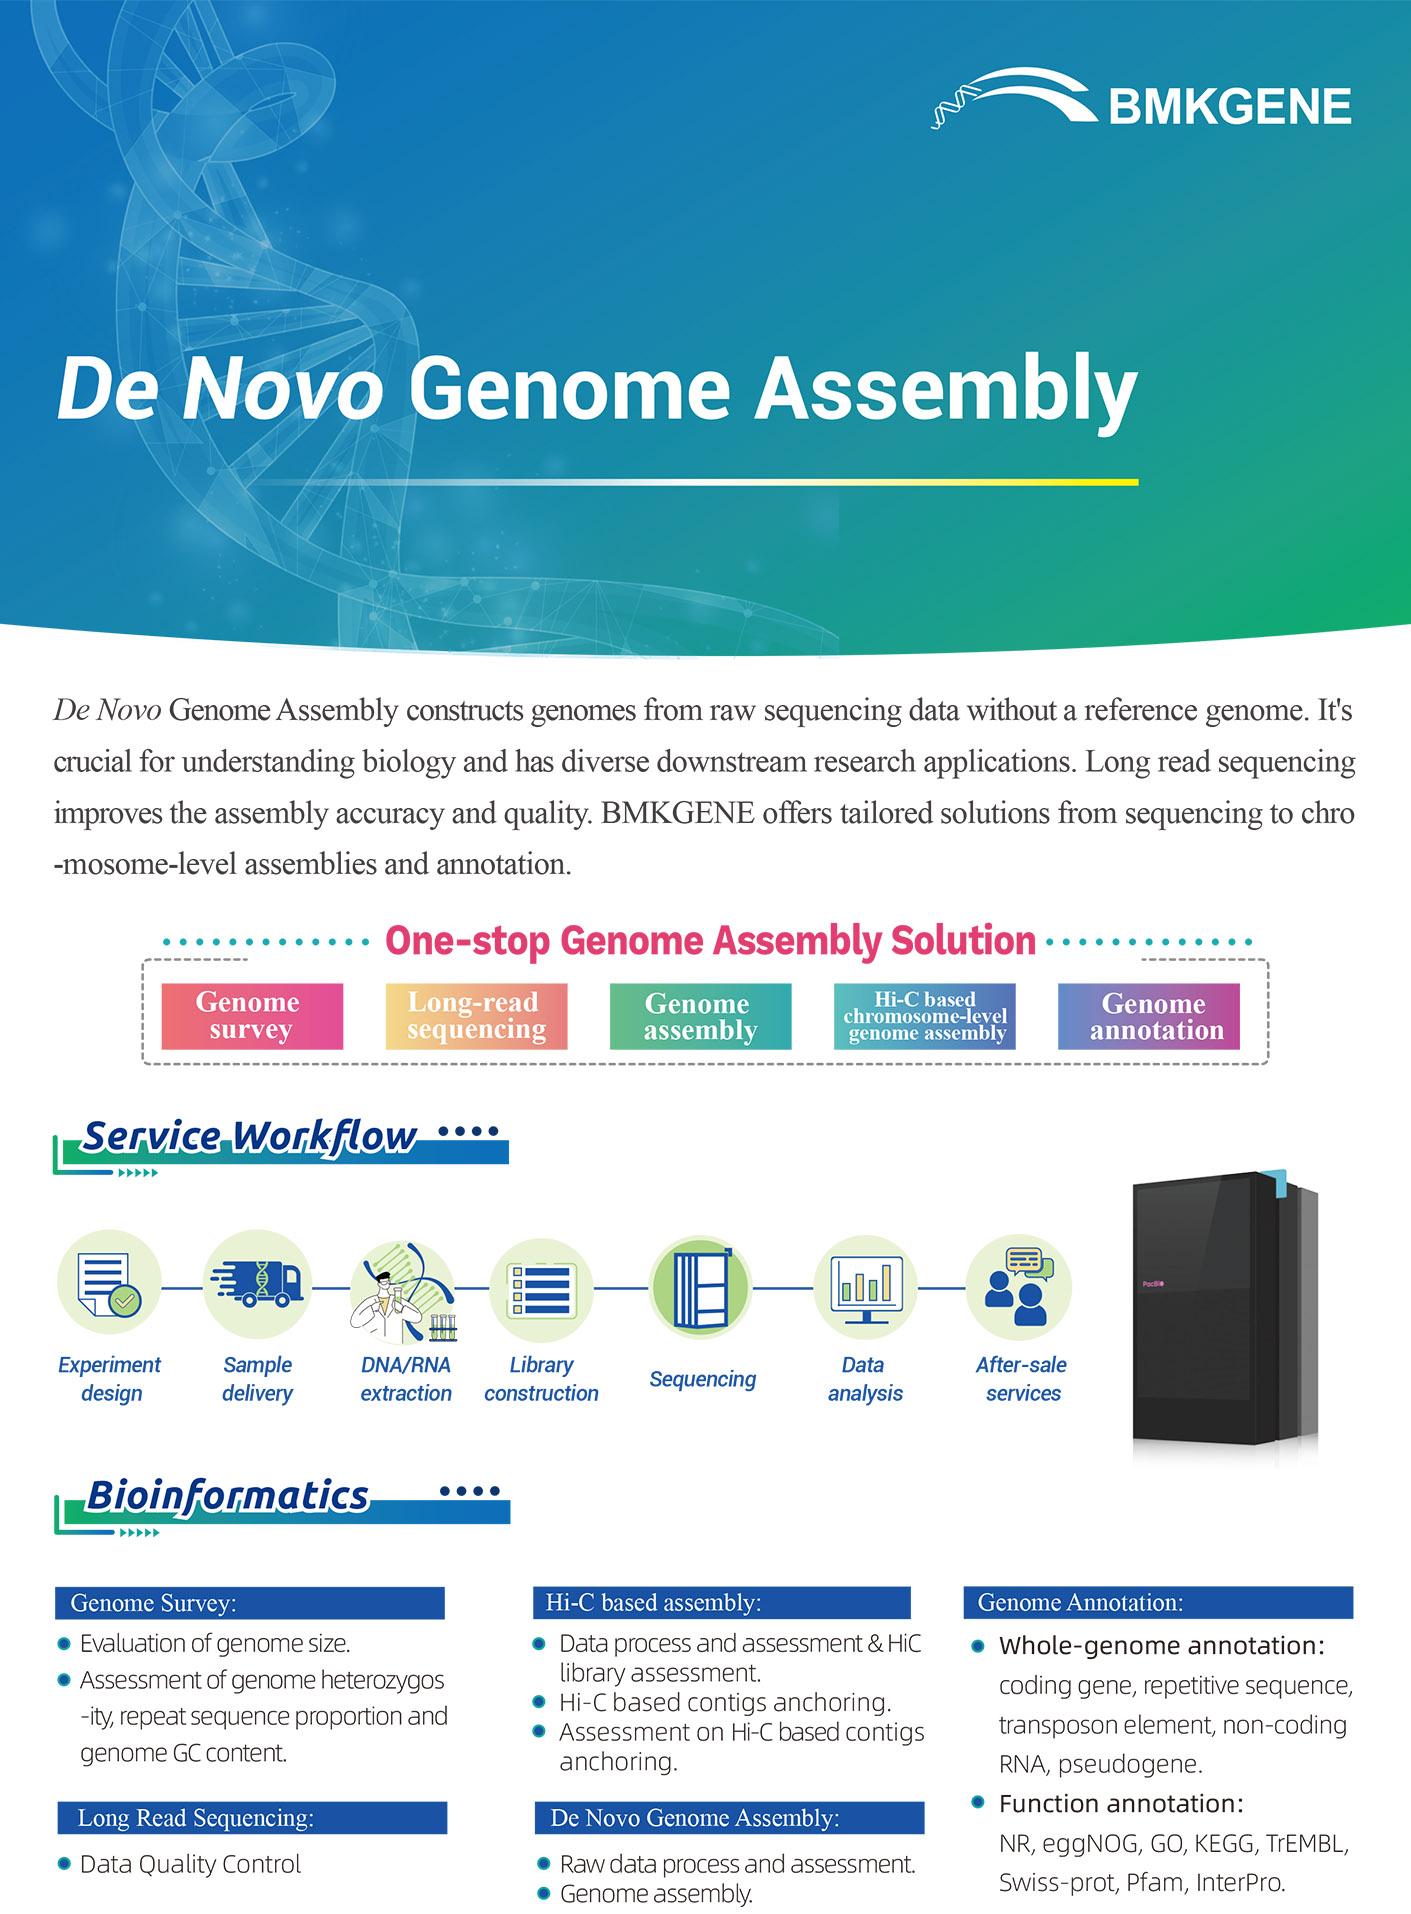 https://www.bmkgene.com/uploads/Plant-and-Animal-De-Novo-Genome-Assembly-BMKGENE-2310.pdf